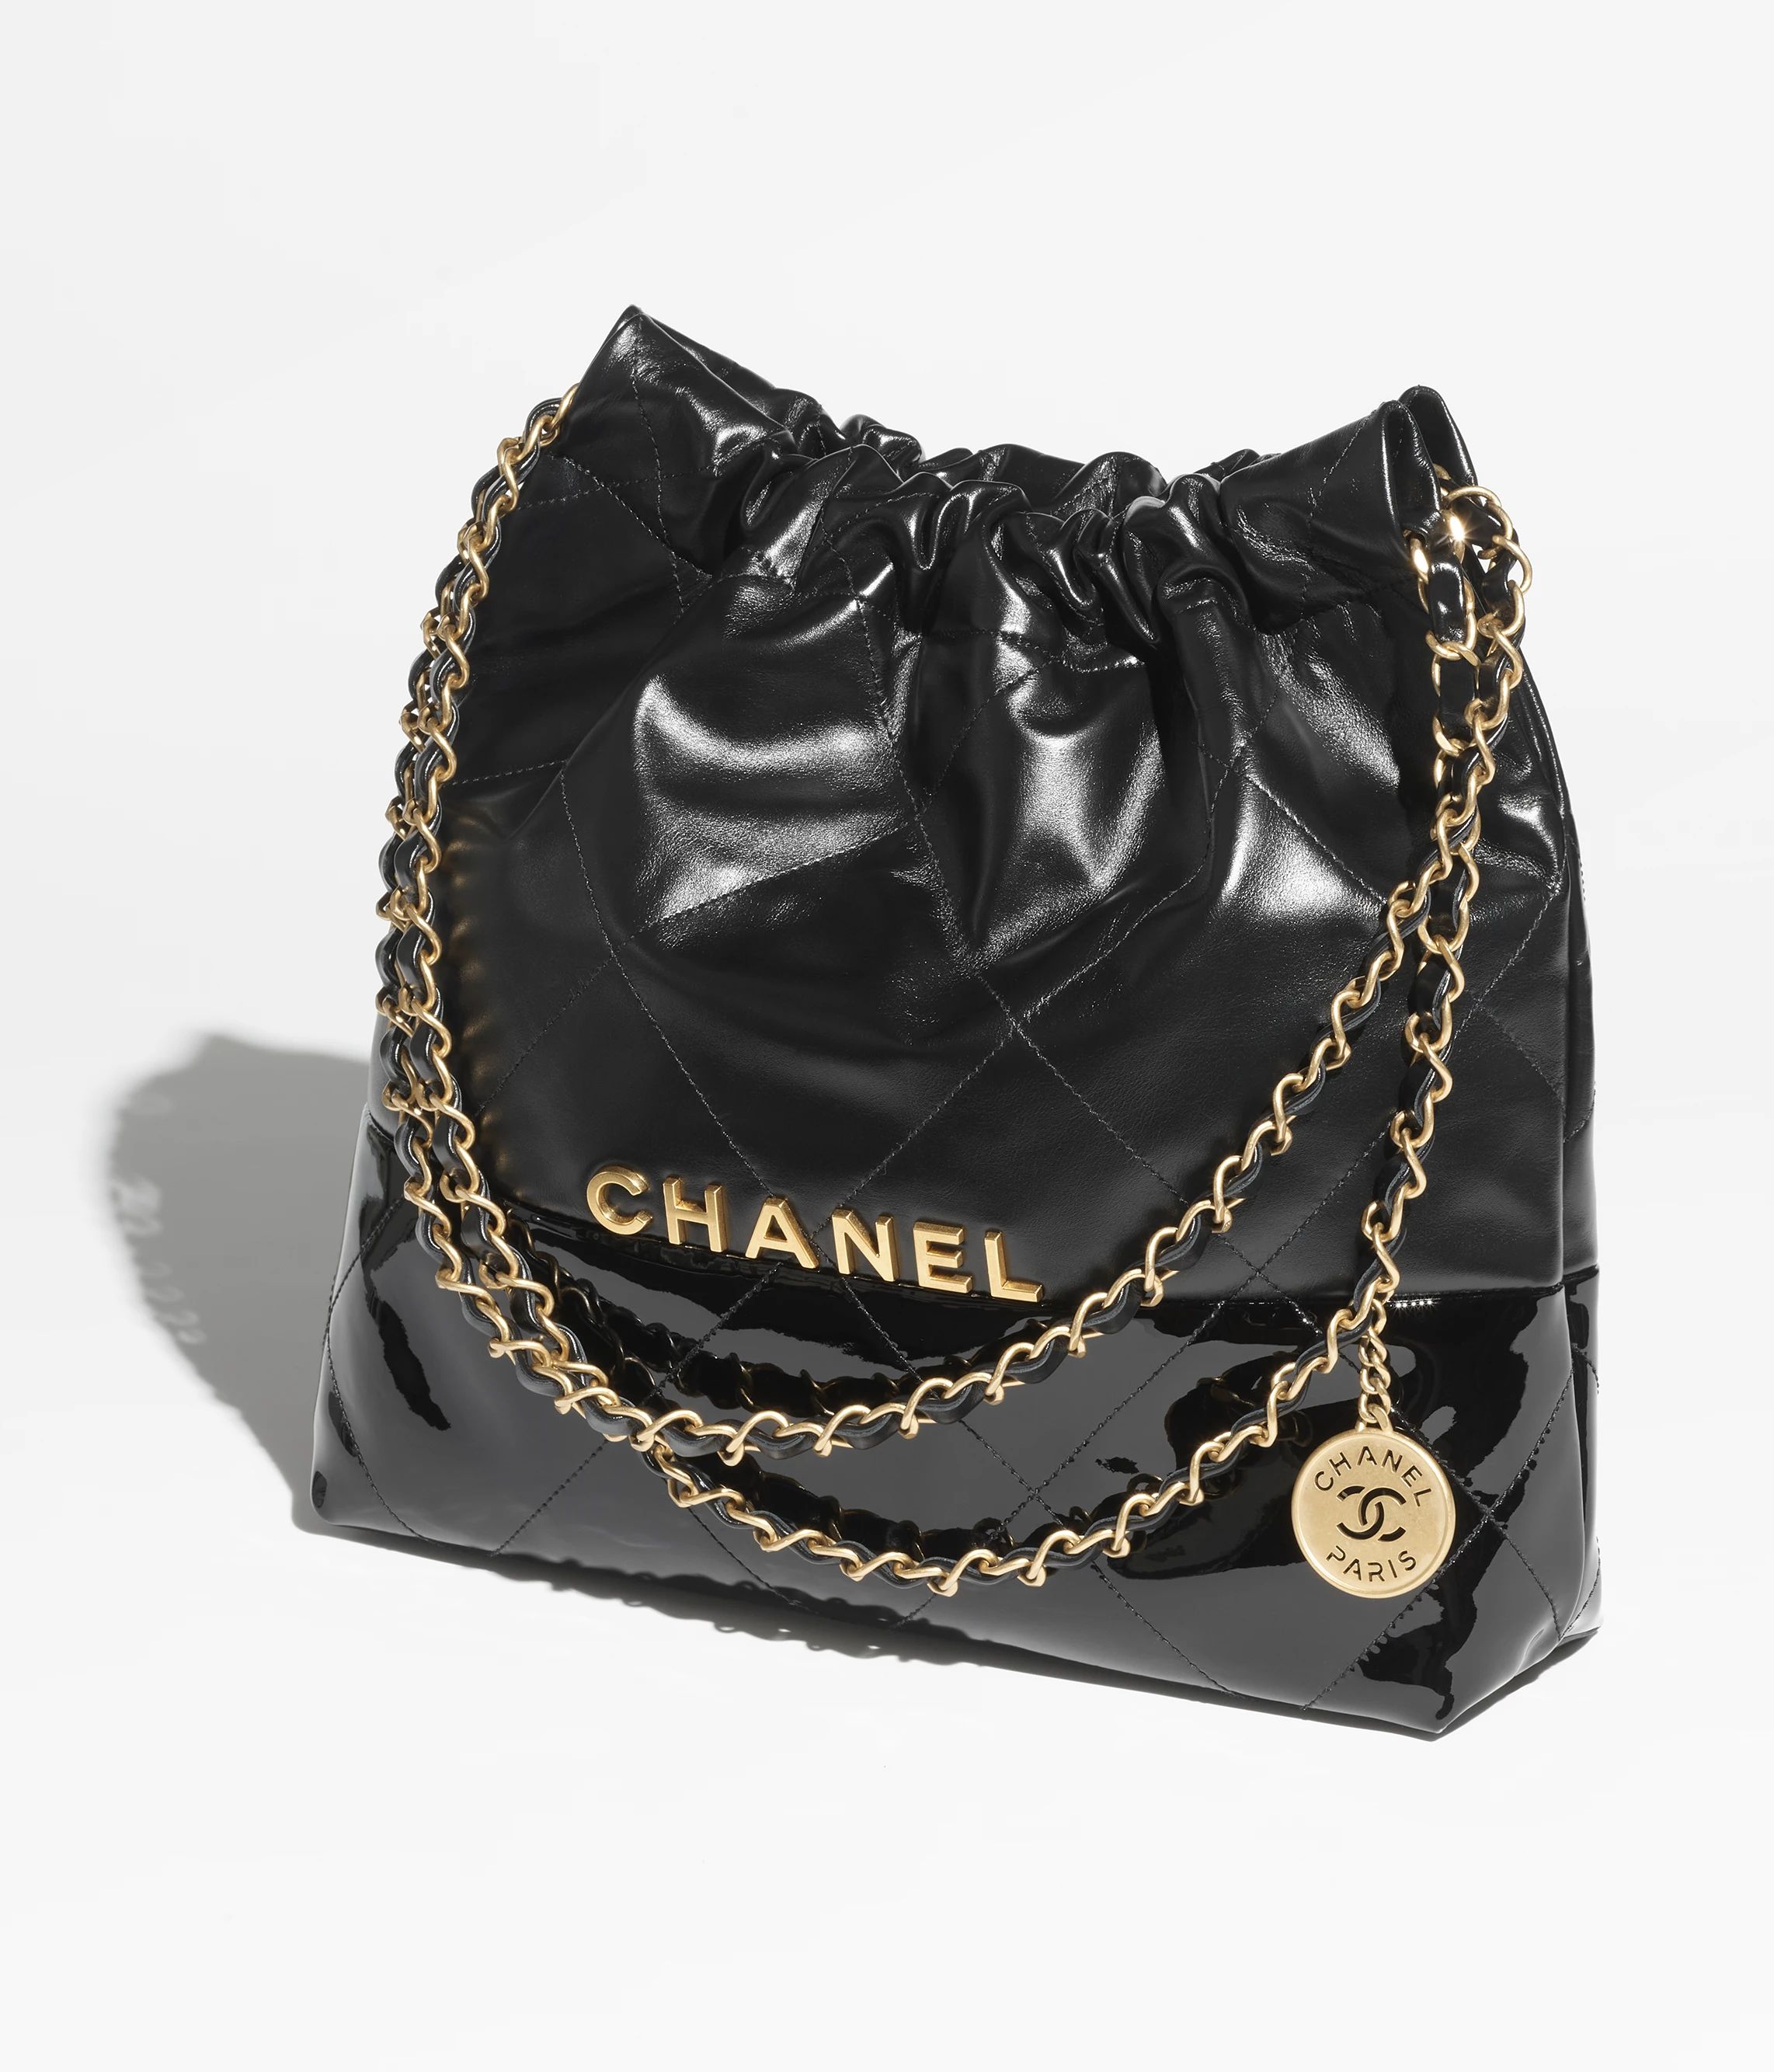 CHANEL 22 Small Handbag | Chanel, Inc. (US)